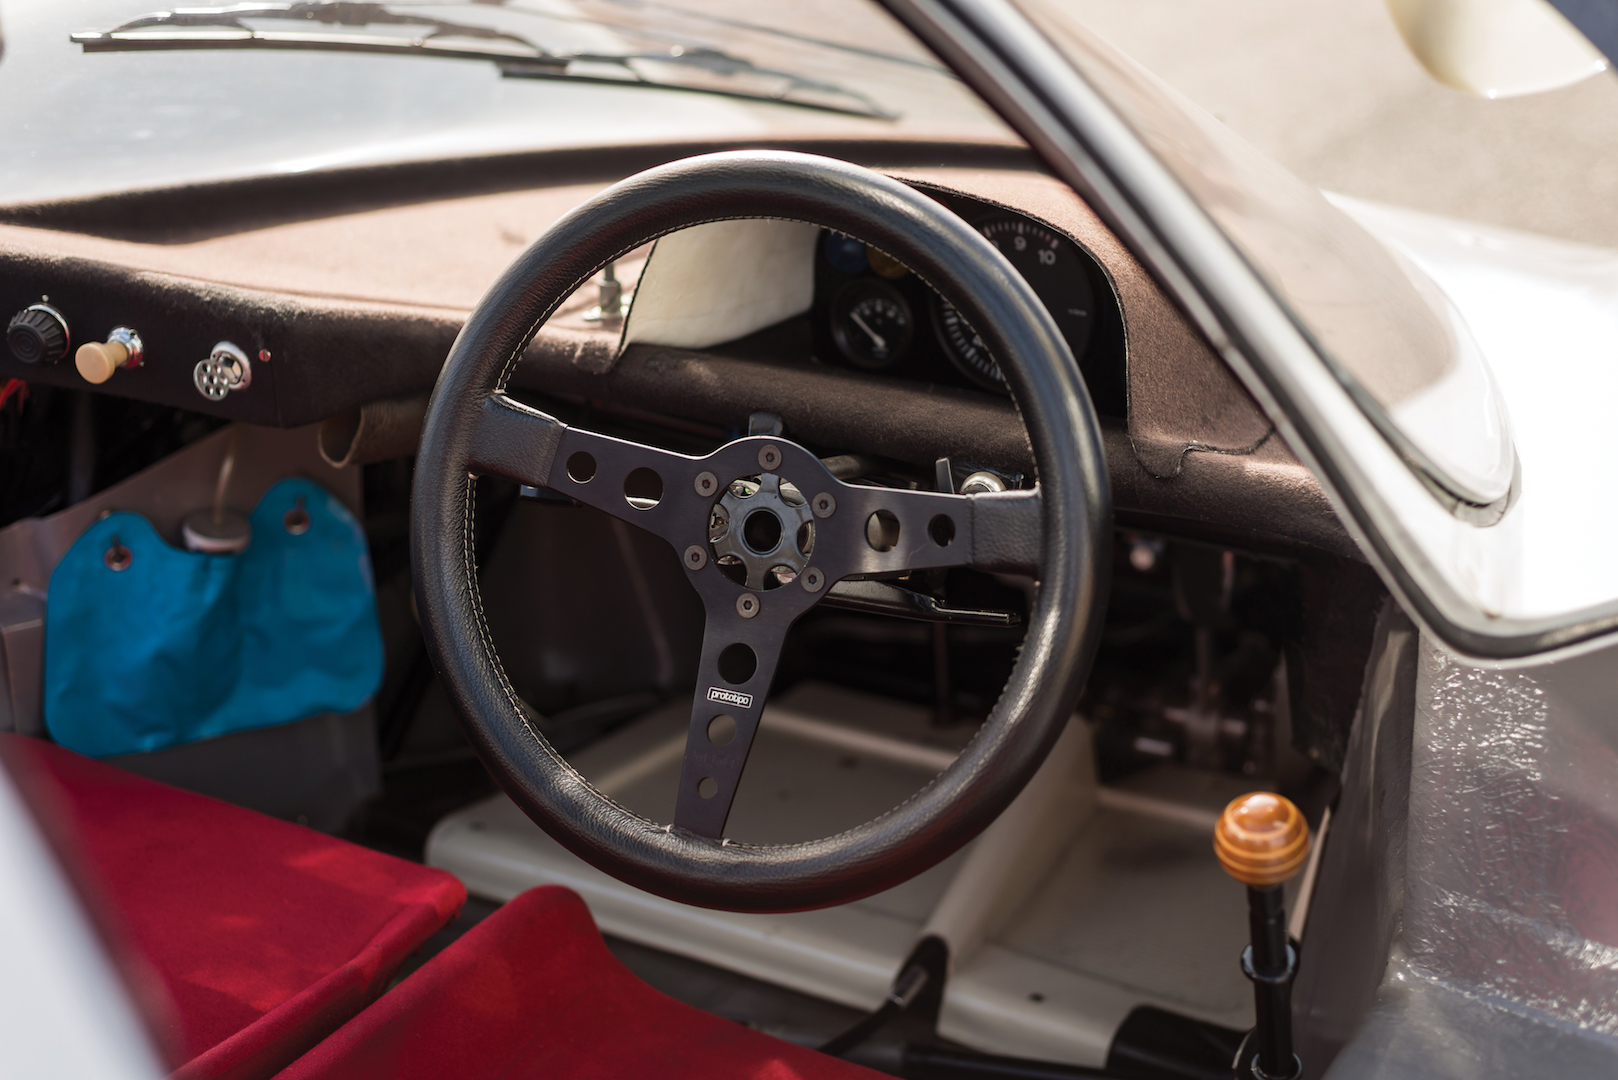 Take to the Road 1968 Porsche 908 Works Short Tail to headline Monterey sale